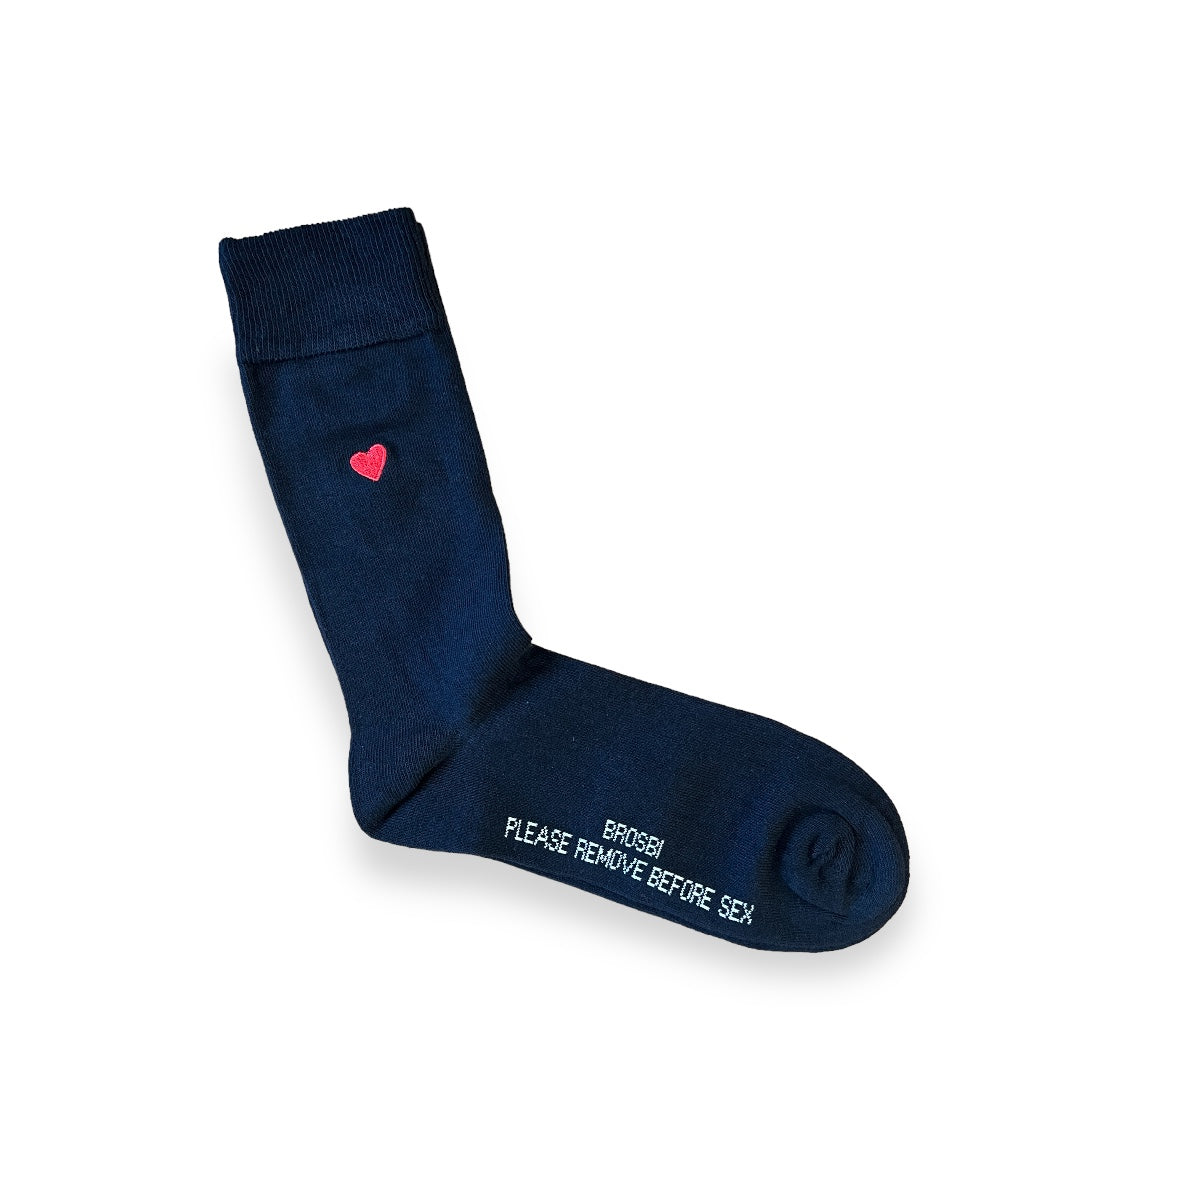 Brosbi The Icon Socks - Heart navy